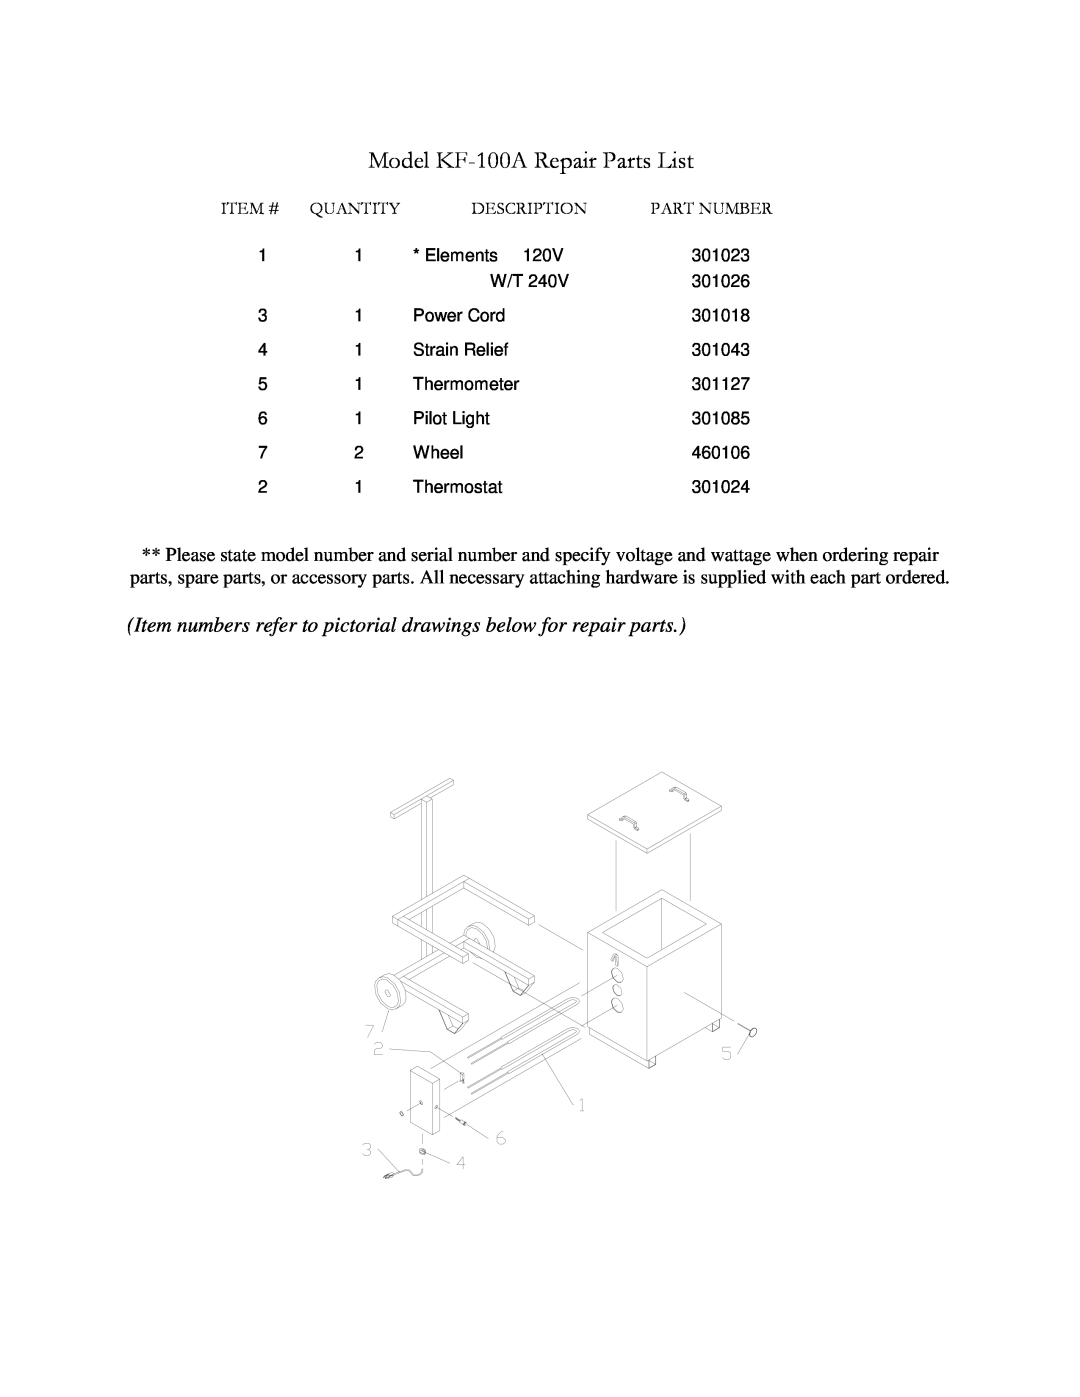 Henkel manual Model KF-100ARepair Parts List, Quantity, Description, Part Number 